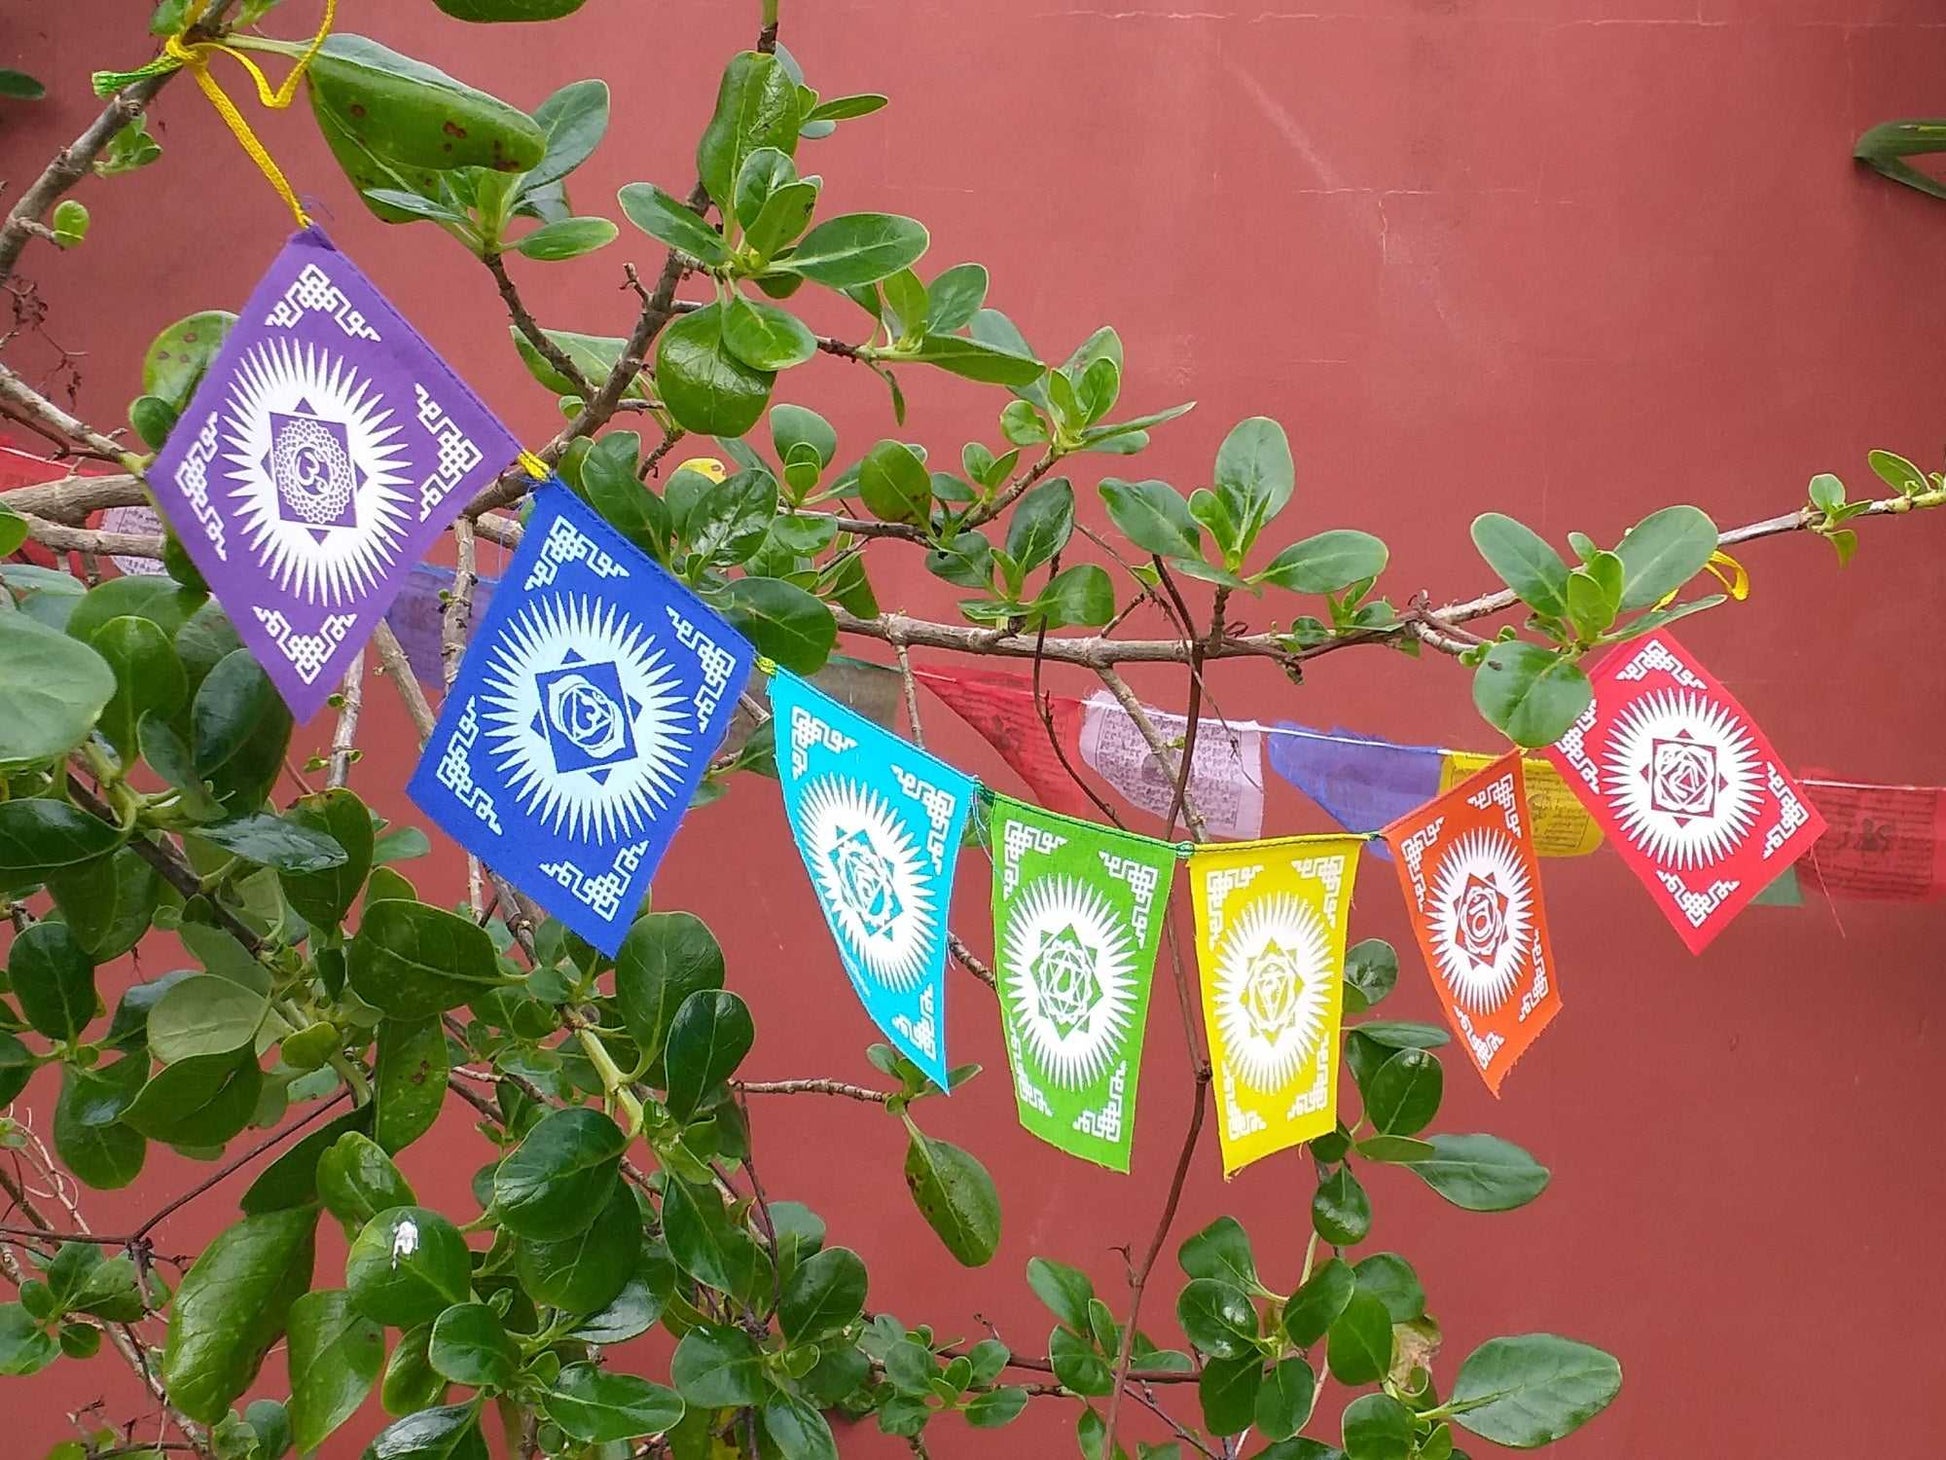 7 Chakra Flags